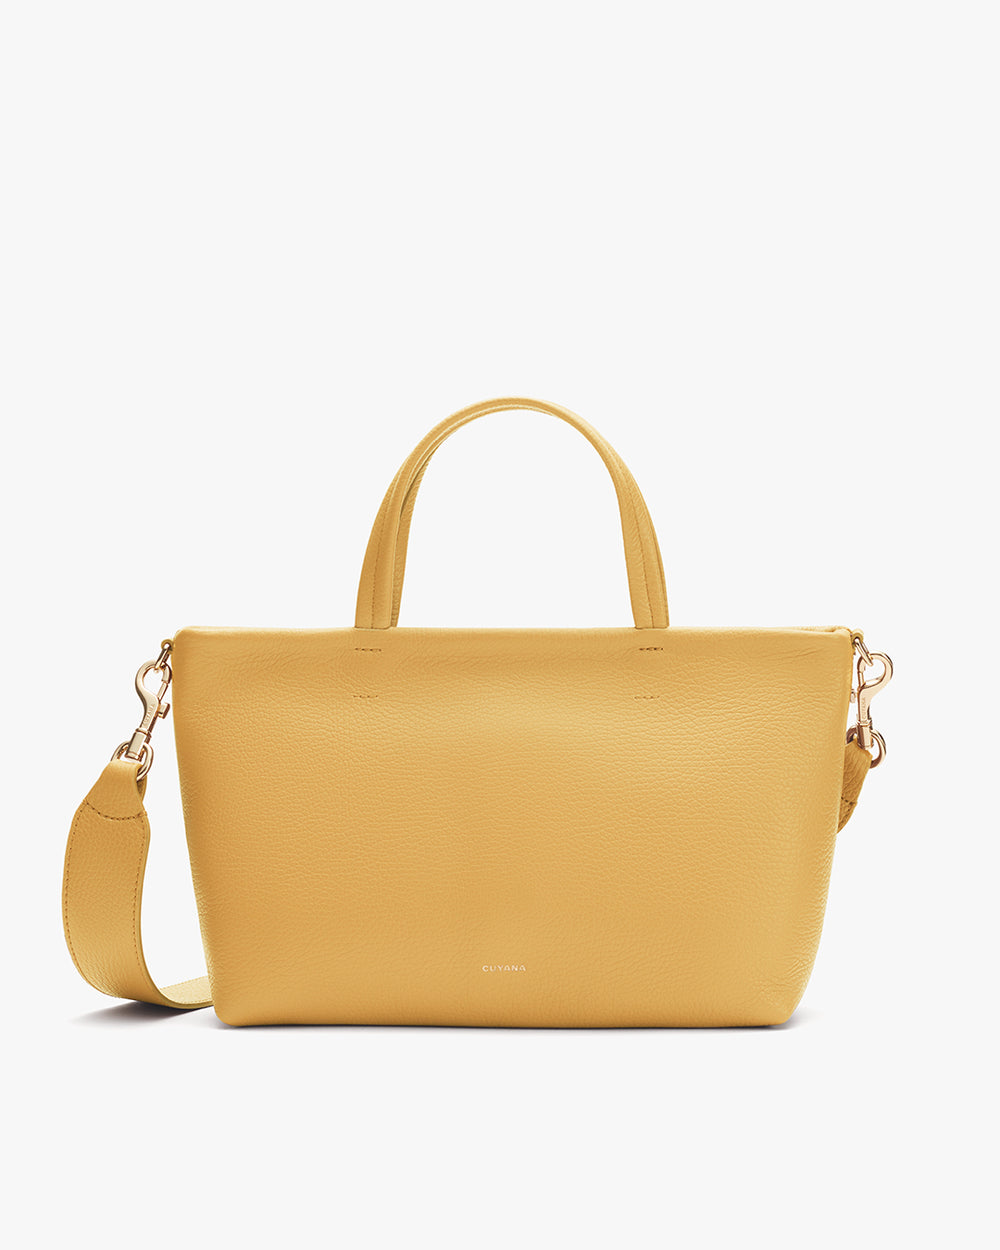 Handbag with top handles and a detachable shoulder strap